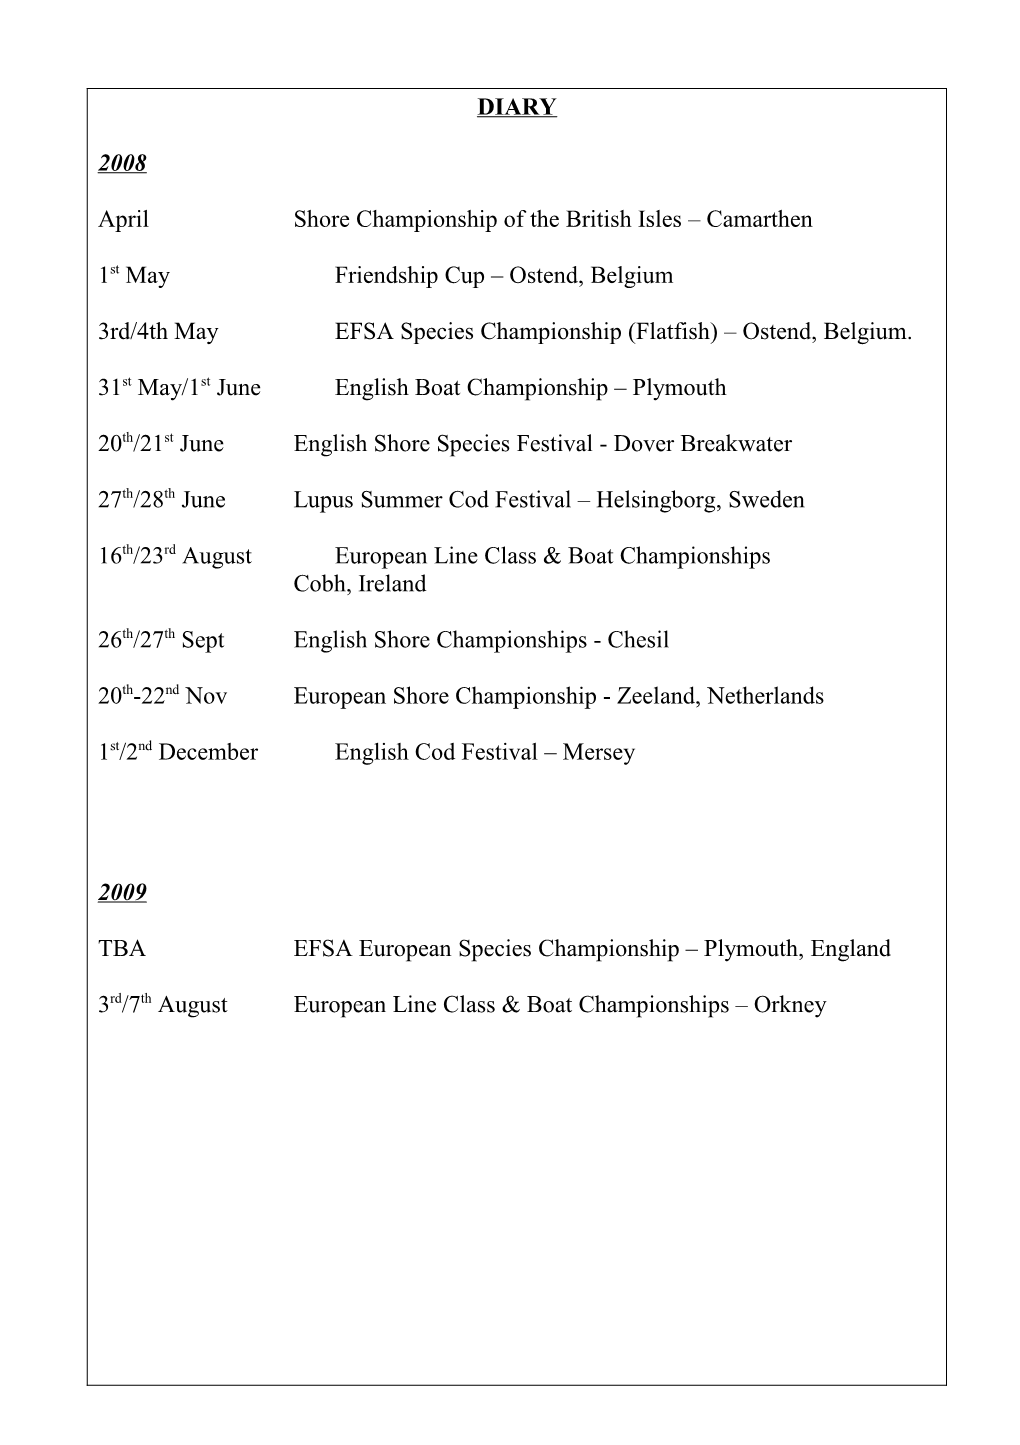 Aprilshore Championship of the British Isles Camarthen